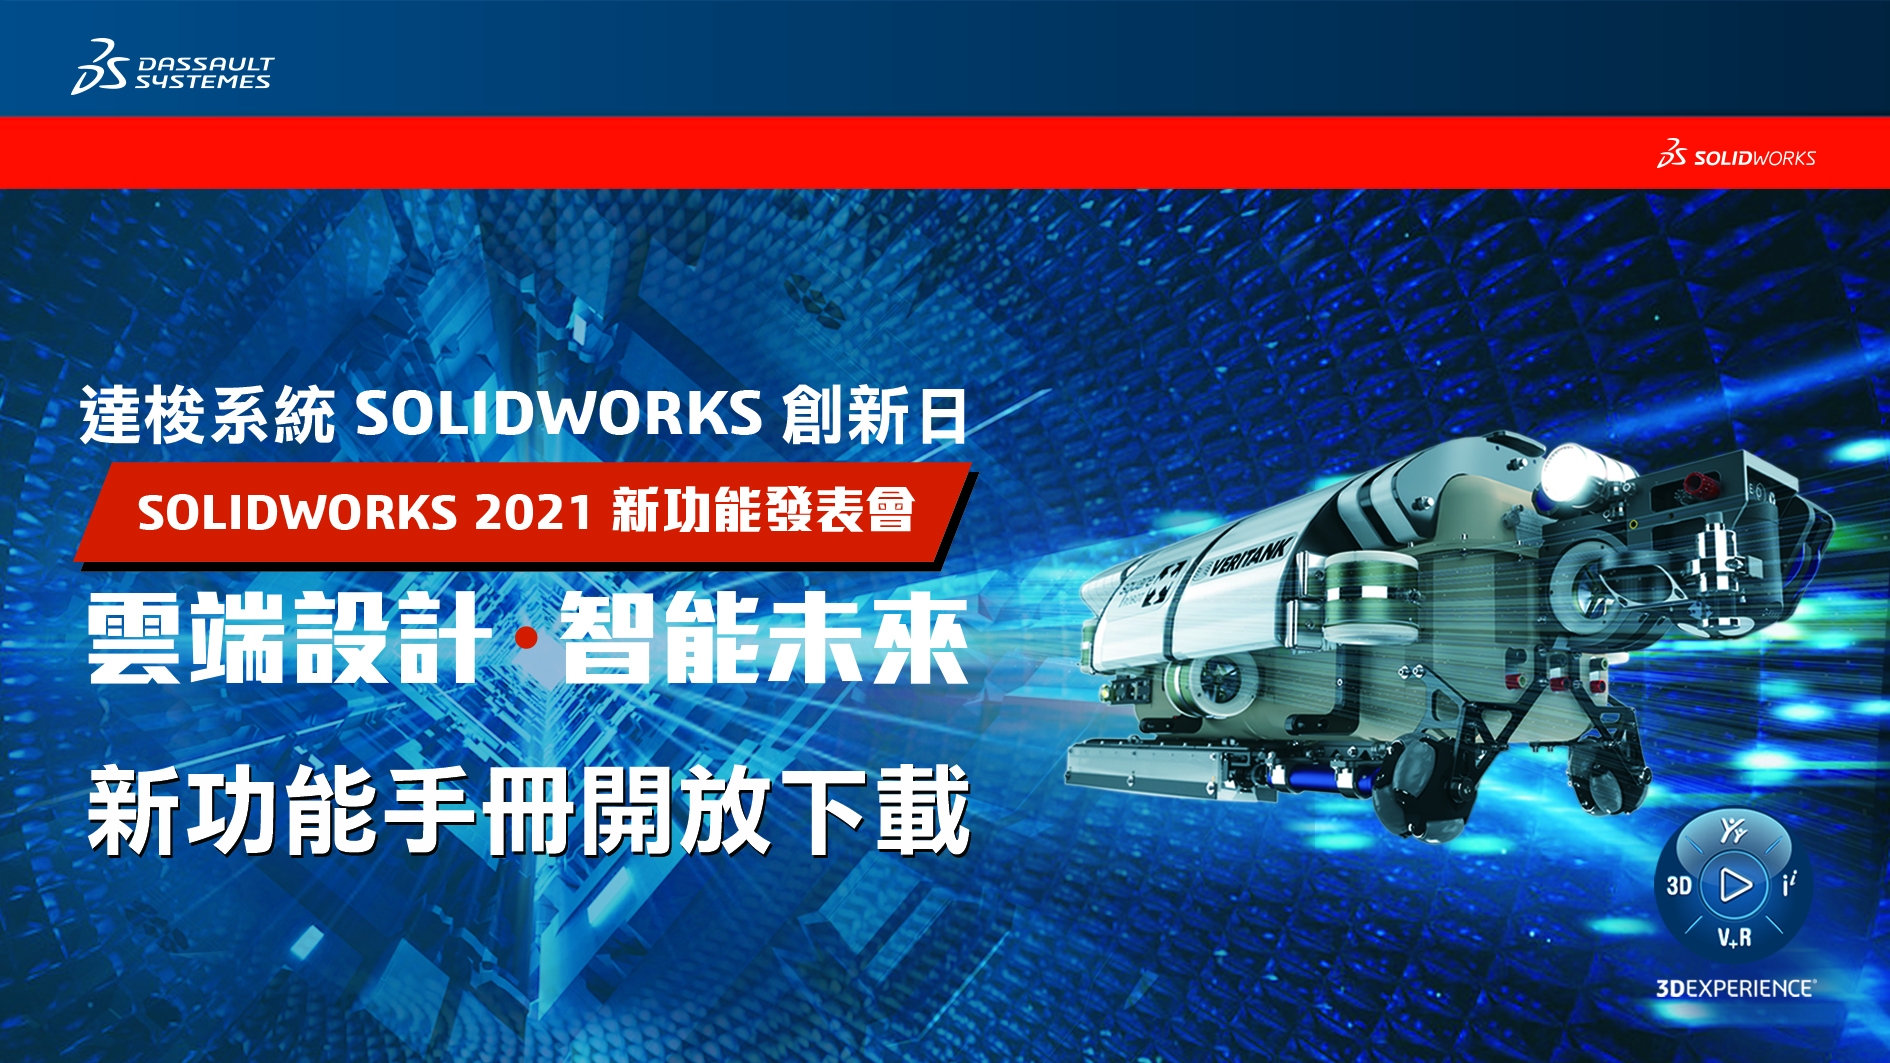 SOLIDWORKS 2021 新功能手册开放下载